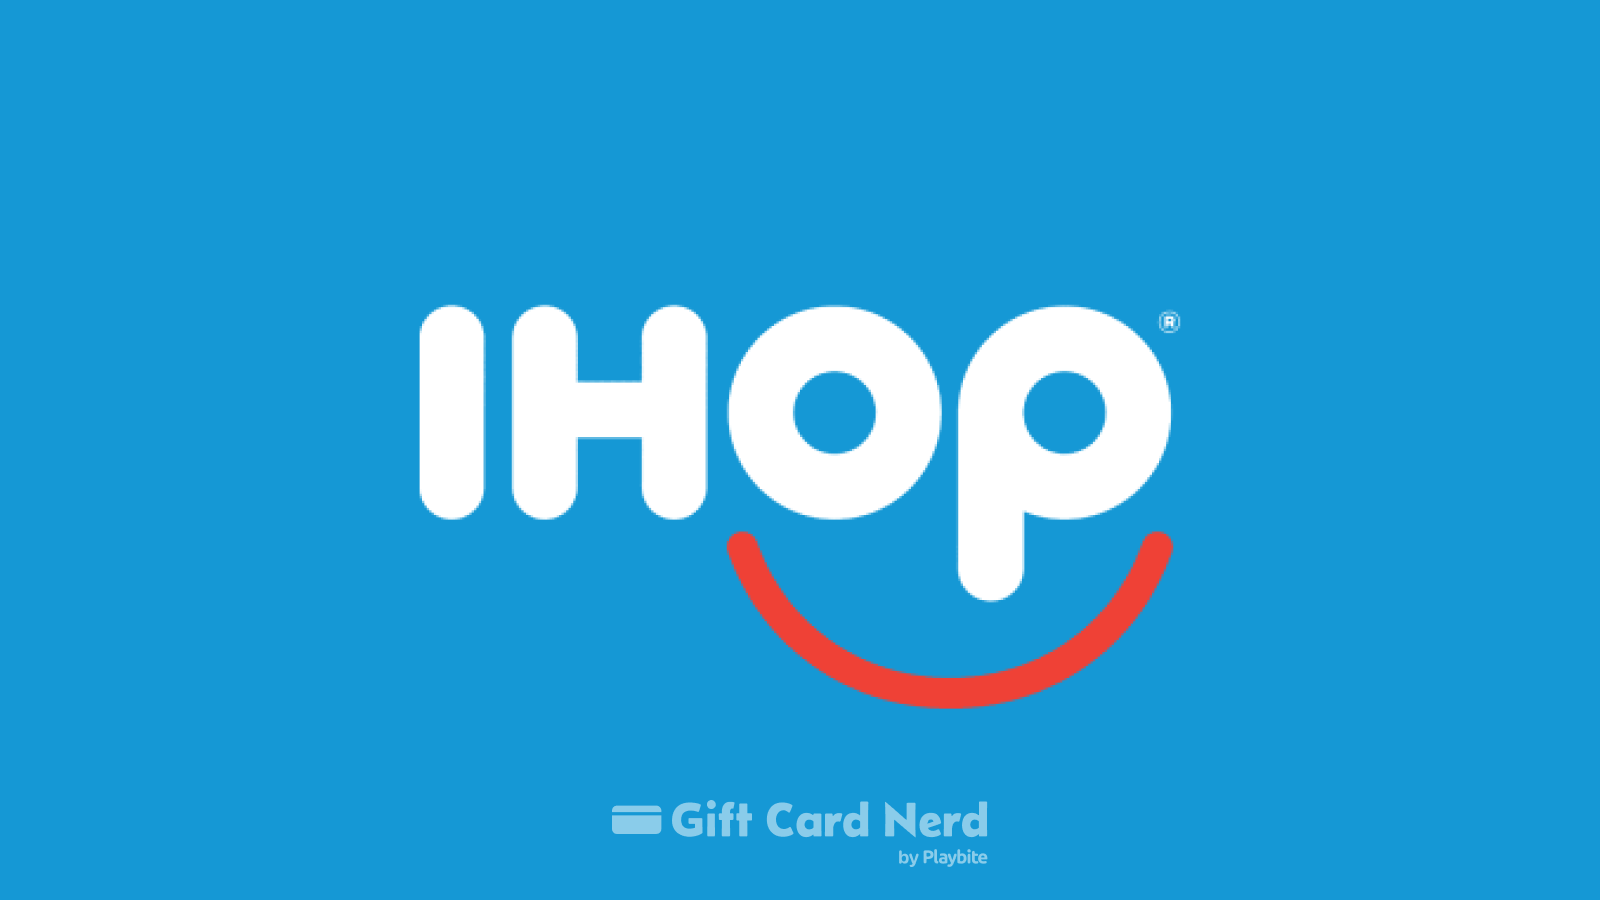 Can I Use an IHOP Gift Card on Grubhub?